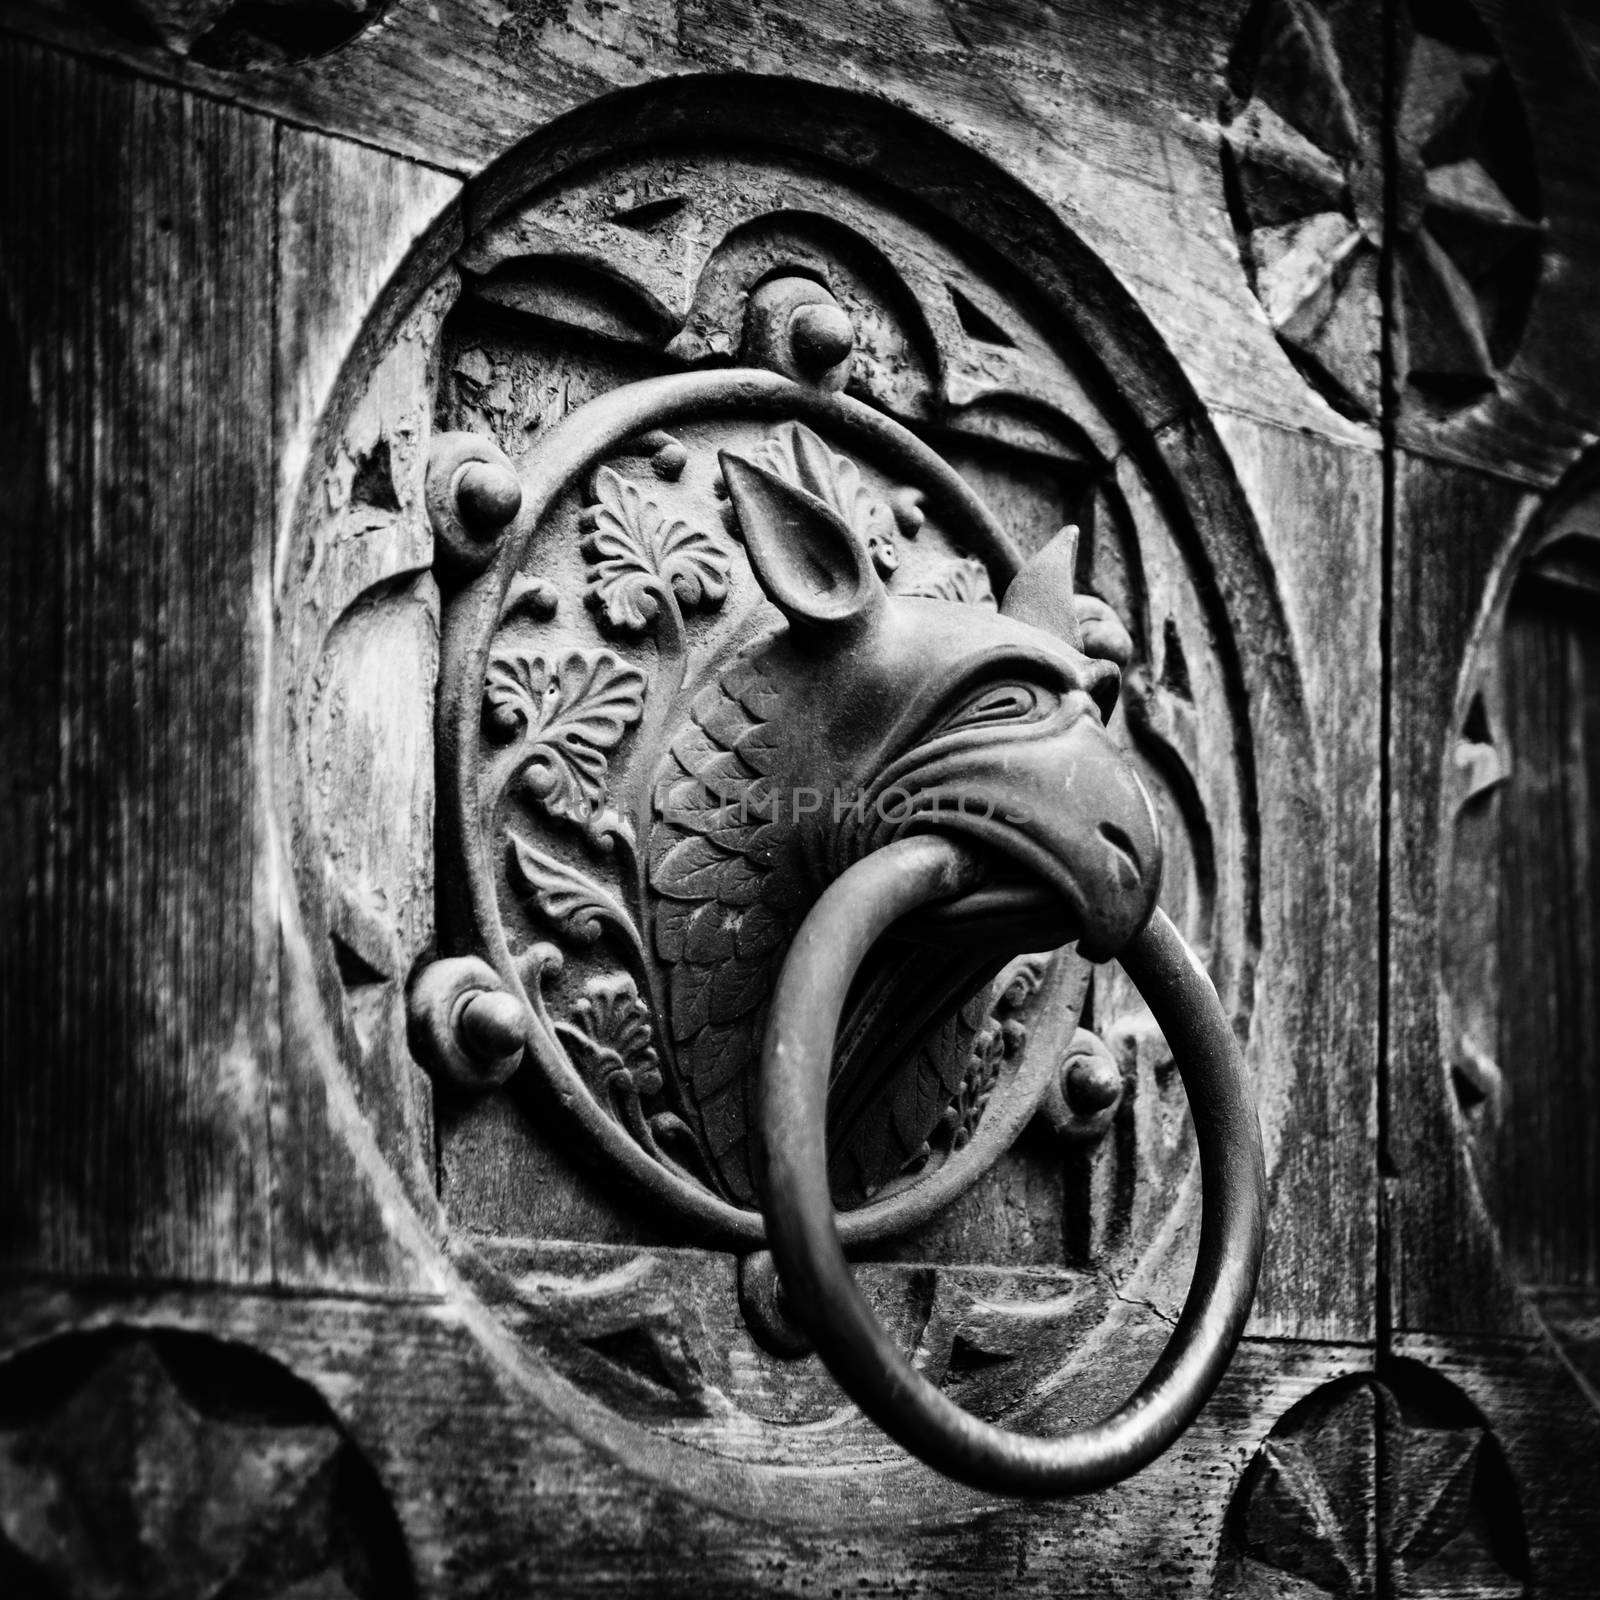 Antique door knocker shaped monster's head. by Isaac74